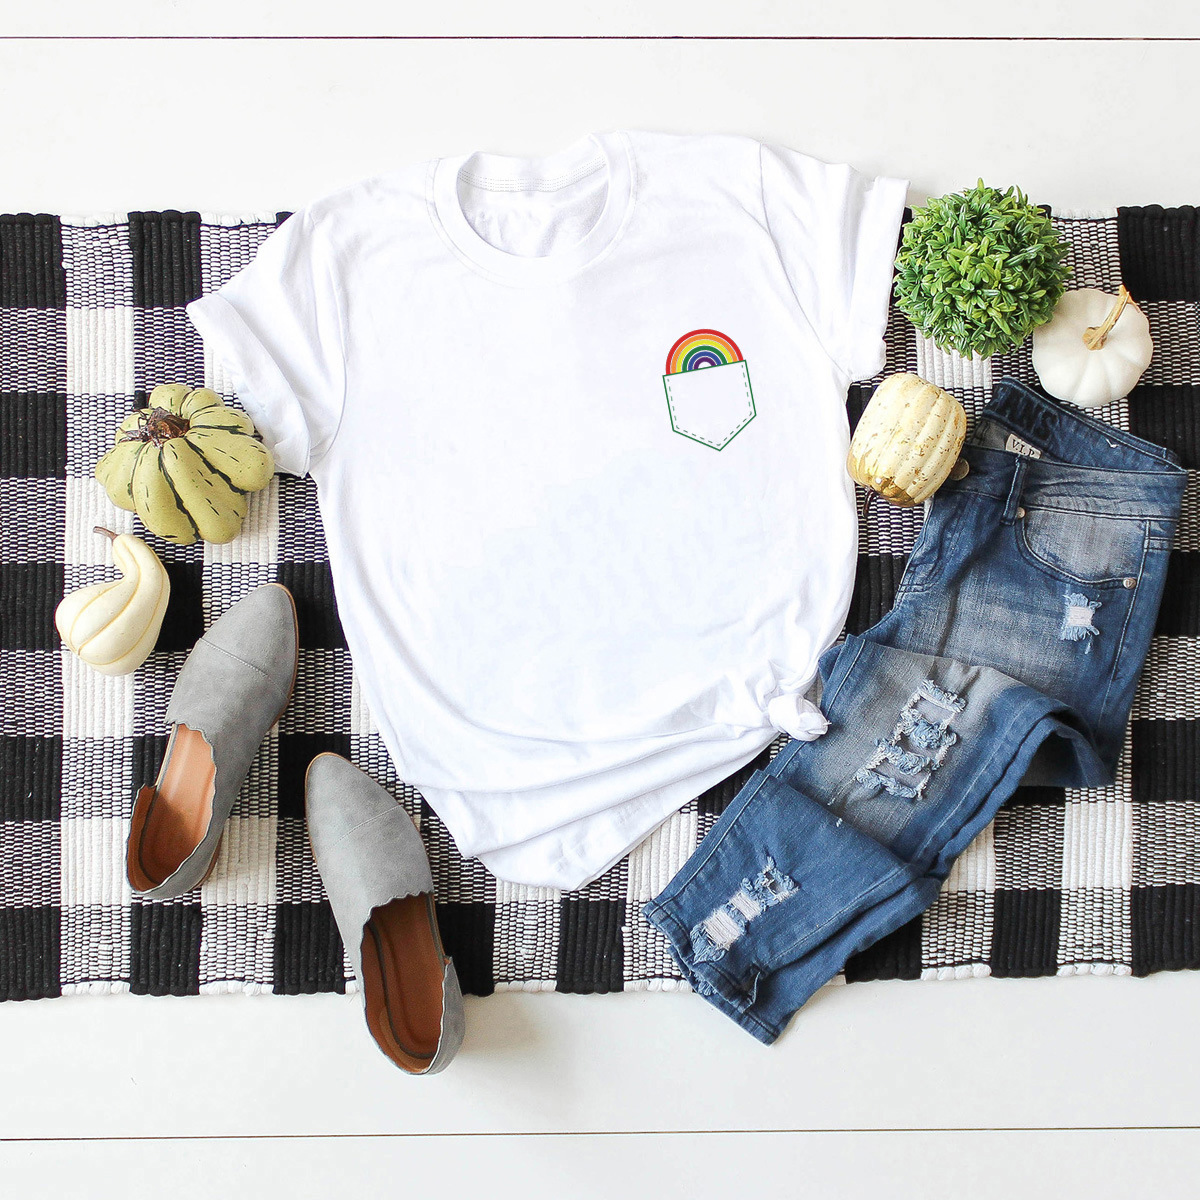 Linda camiseta de manga corta de algodón con bolsillo y arcoíris NSSN13840